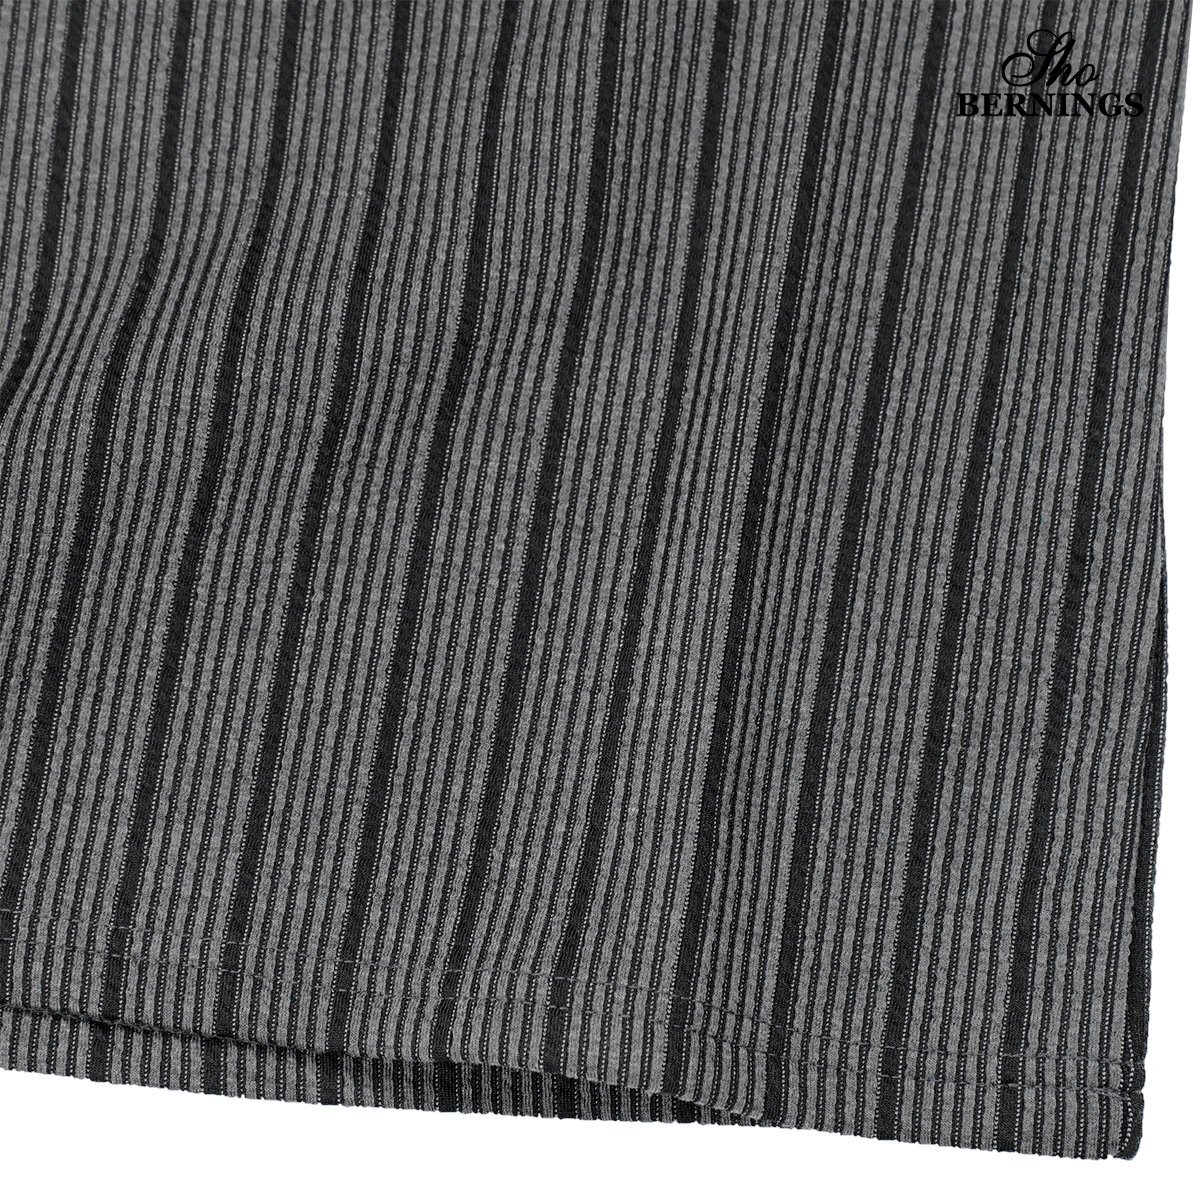 334033-10 Bernings sho ポロシャツ ハーフジップ 長袖 ストライプ柄 シンプル ロンT mens メンズ(ホワイト白×ブラック黒) M_画像3